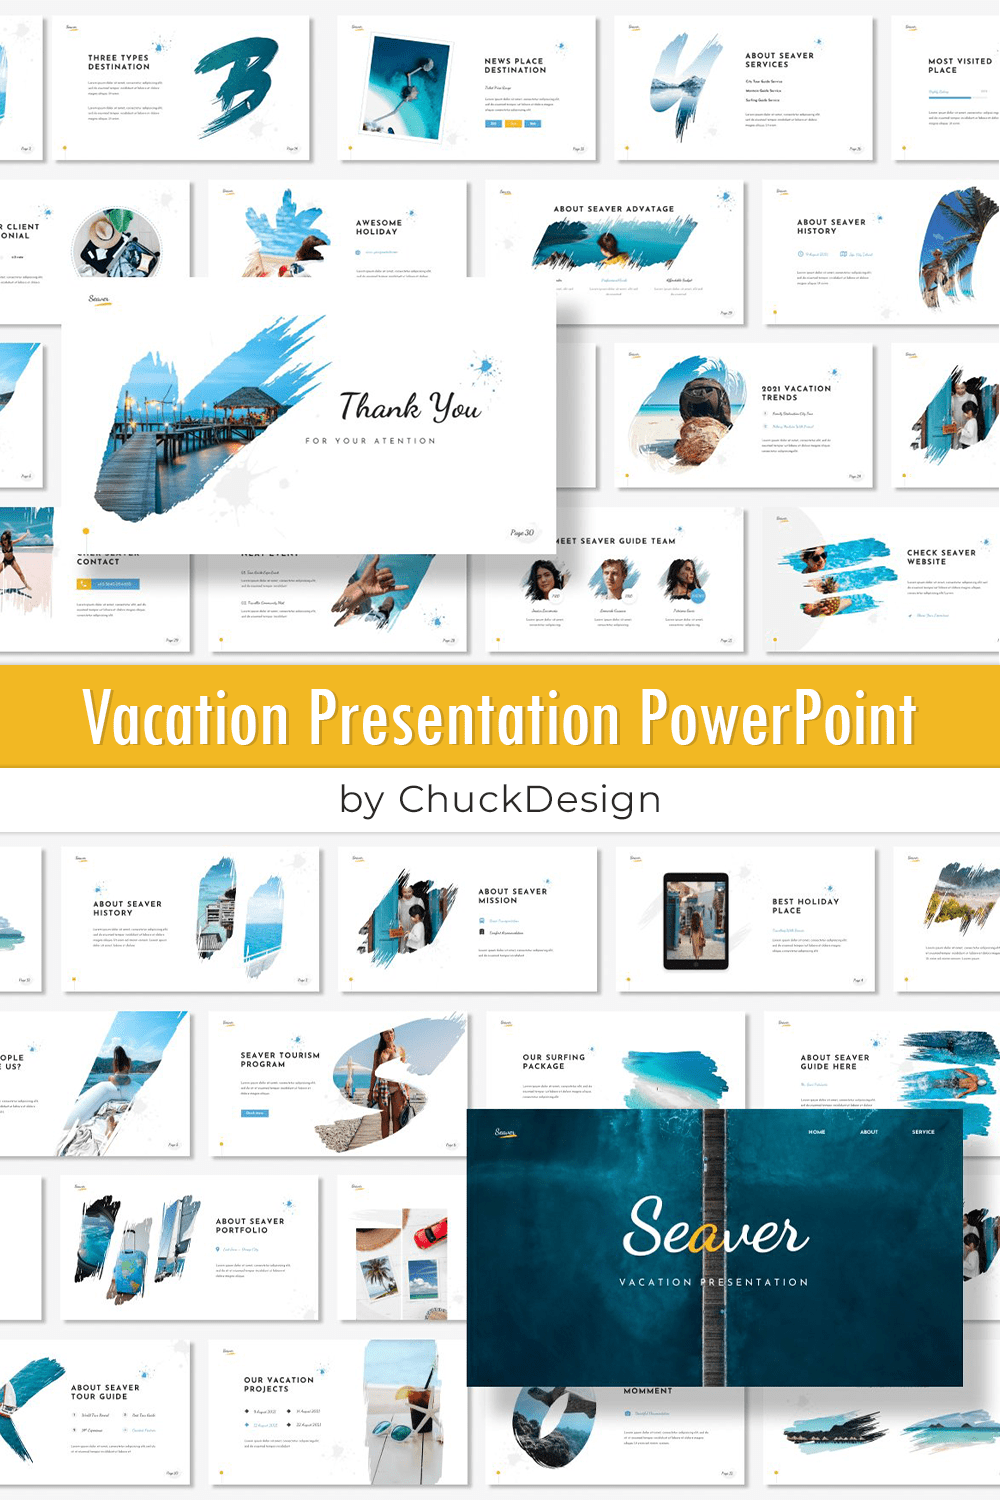 Vacation Presentation PowerPoint pinterest image.